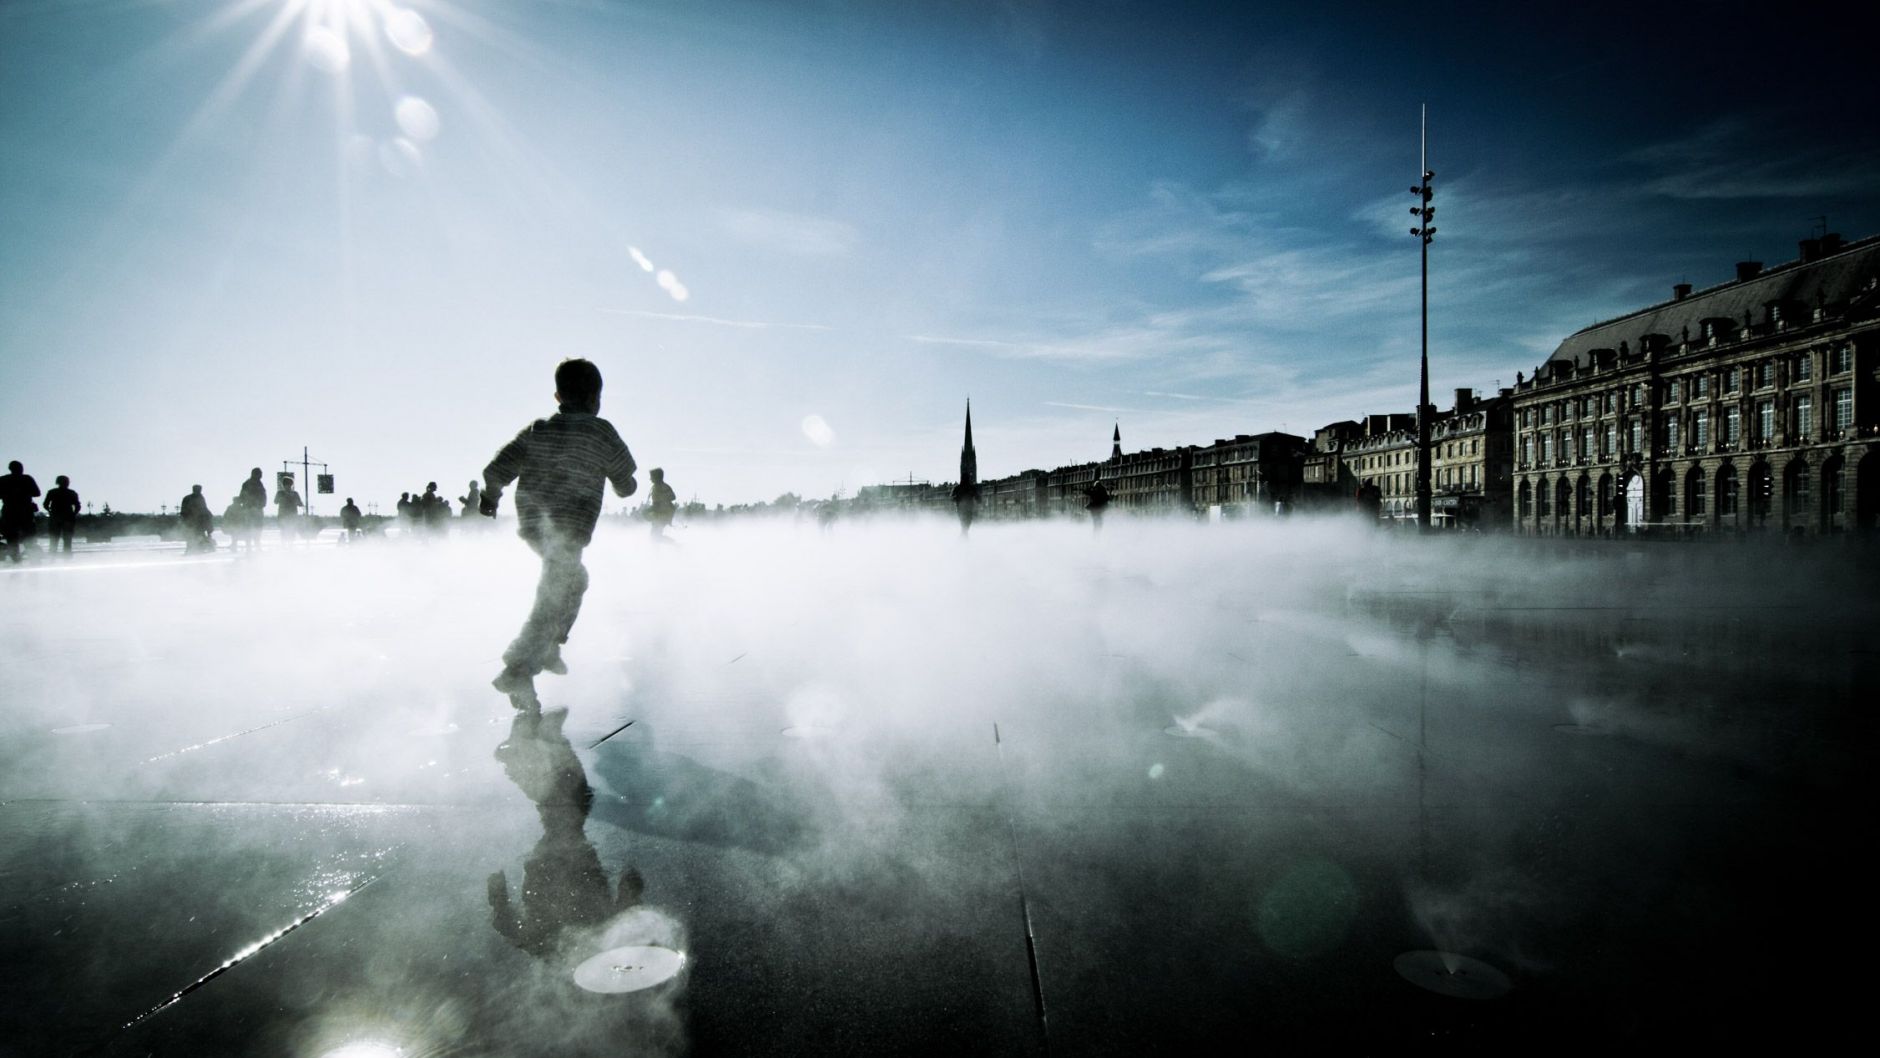 Boy running through the mist on the Water Mirror, Bordeaux